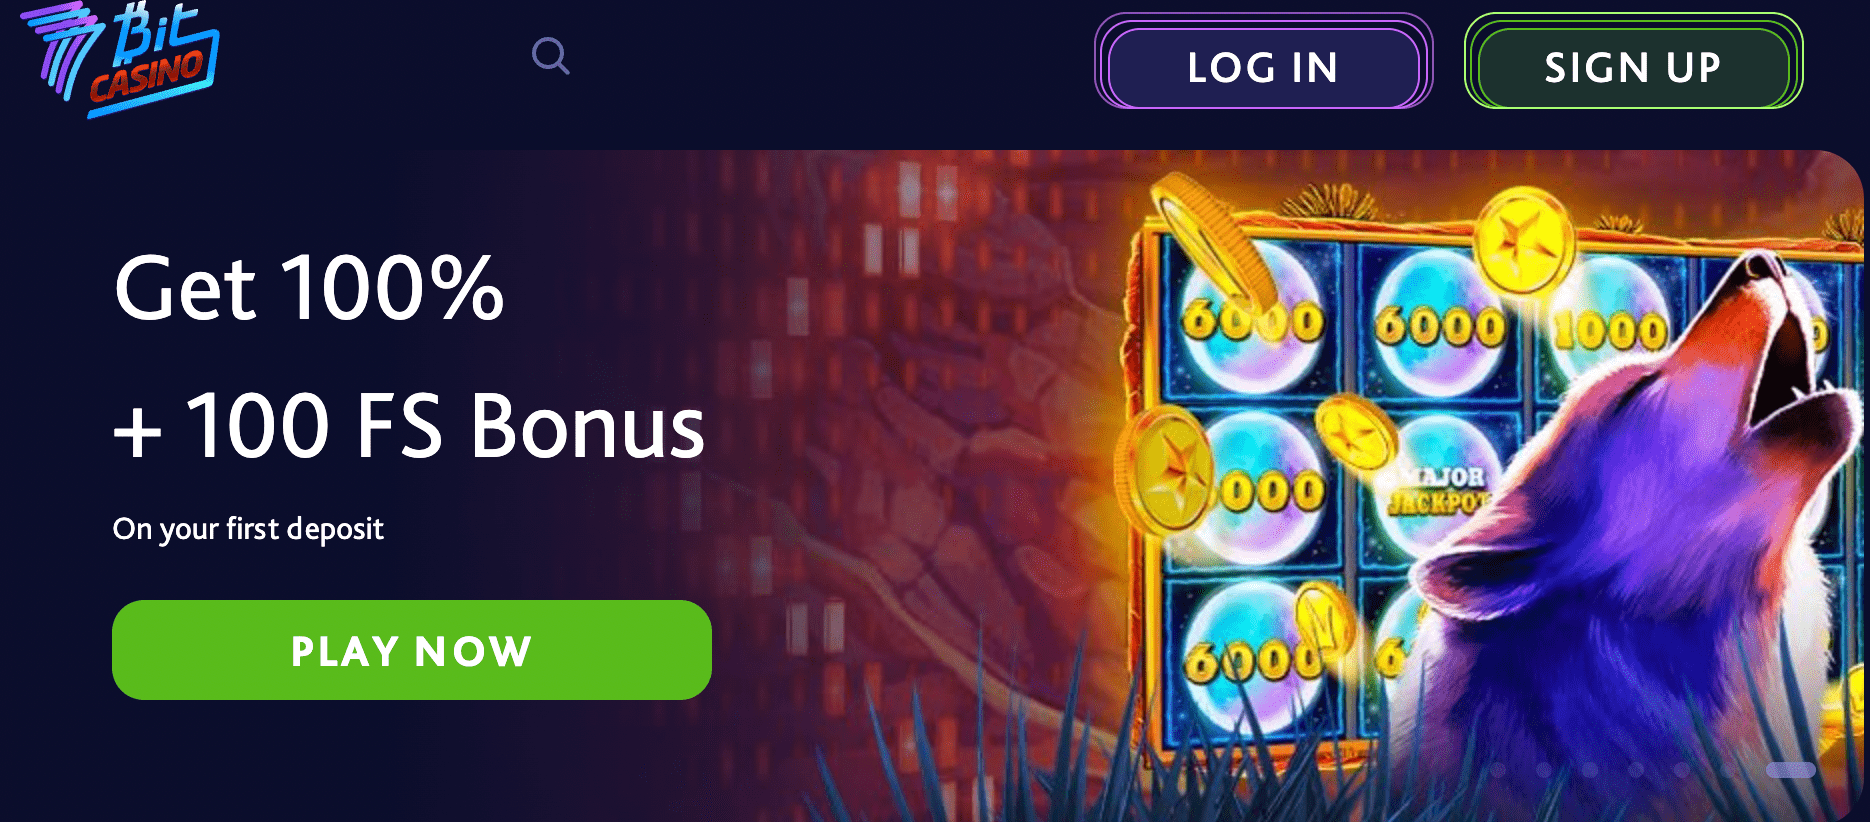 7Bit online casino offer